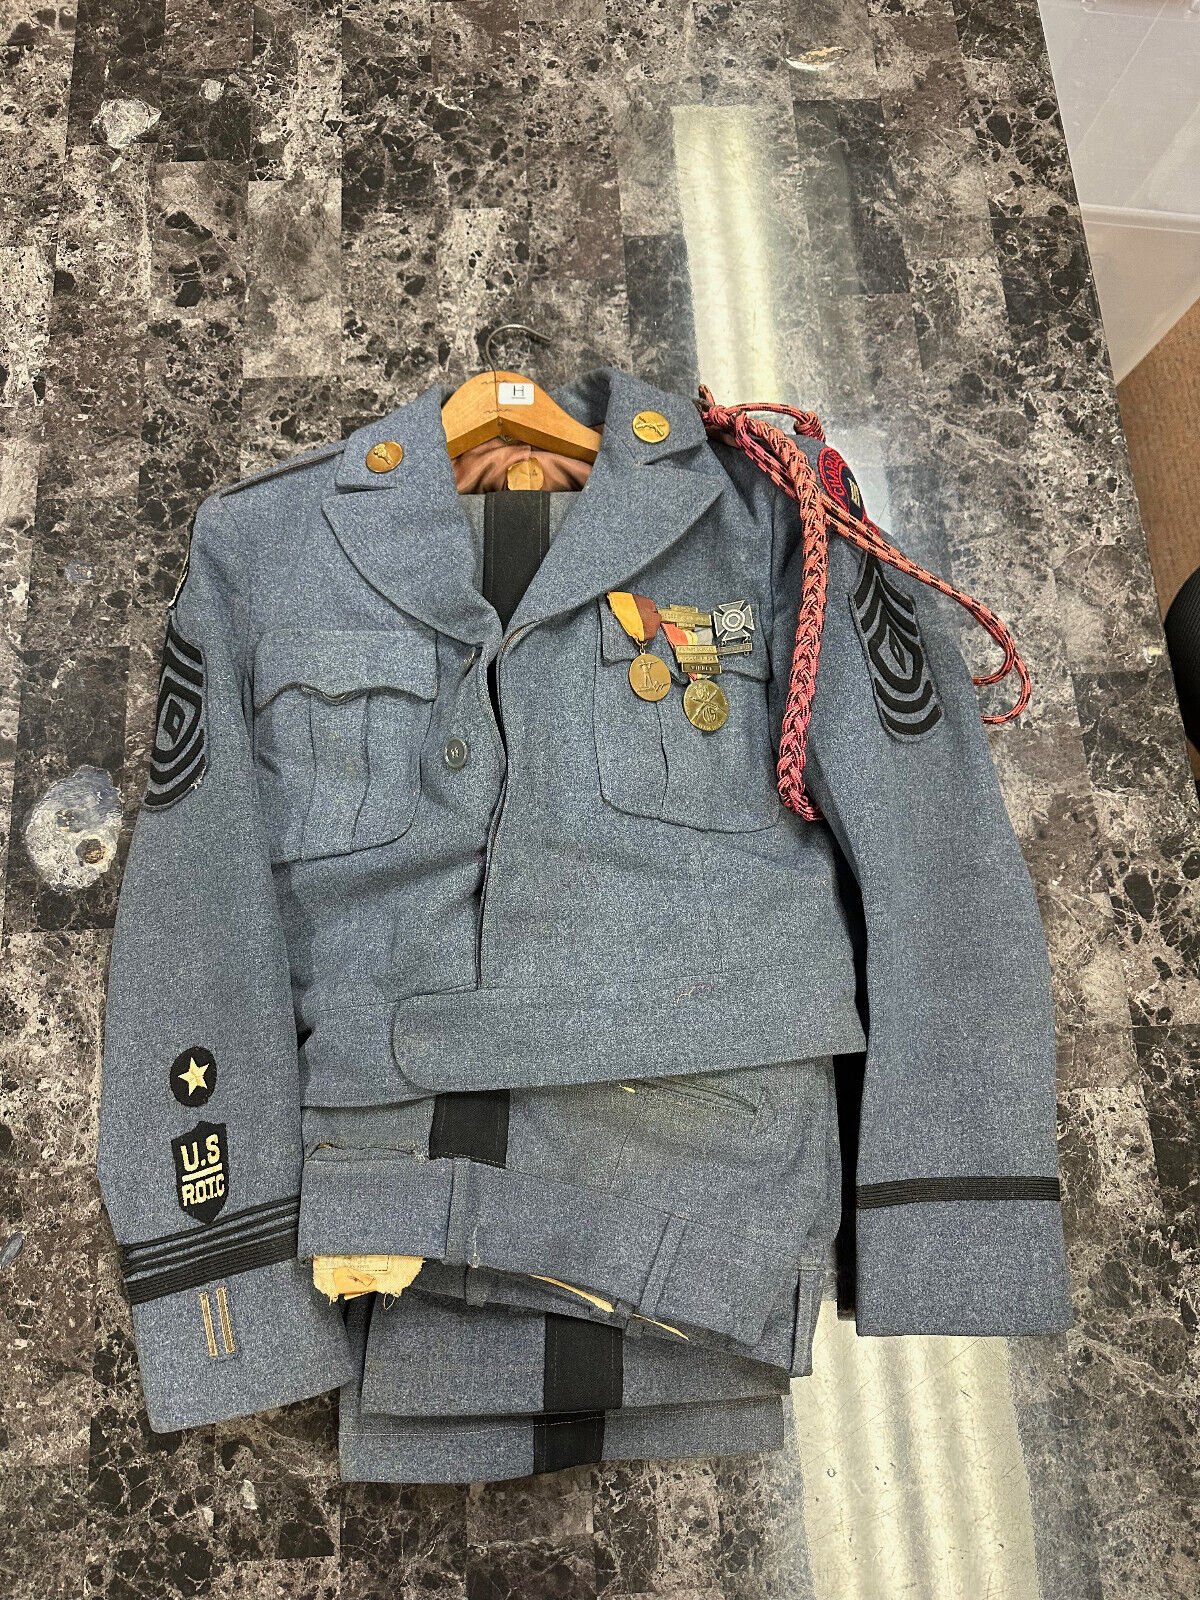 K) Augusta Military Academy 1955 US ROTC First Sergeant Uniform Jacket & Pants